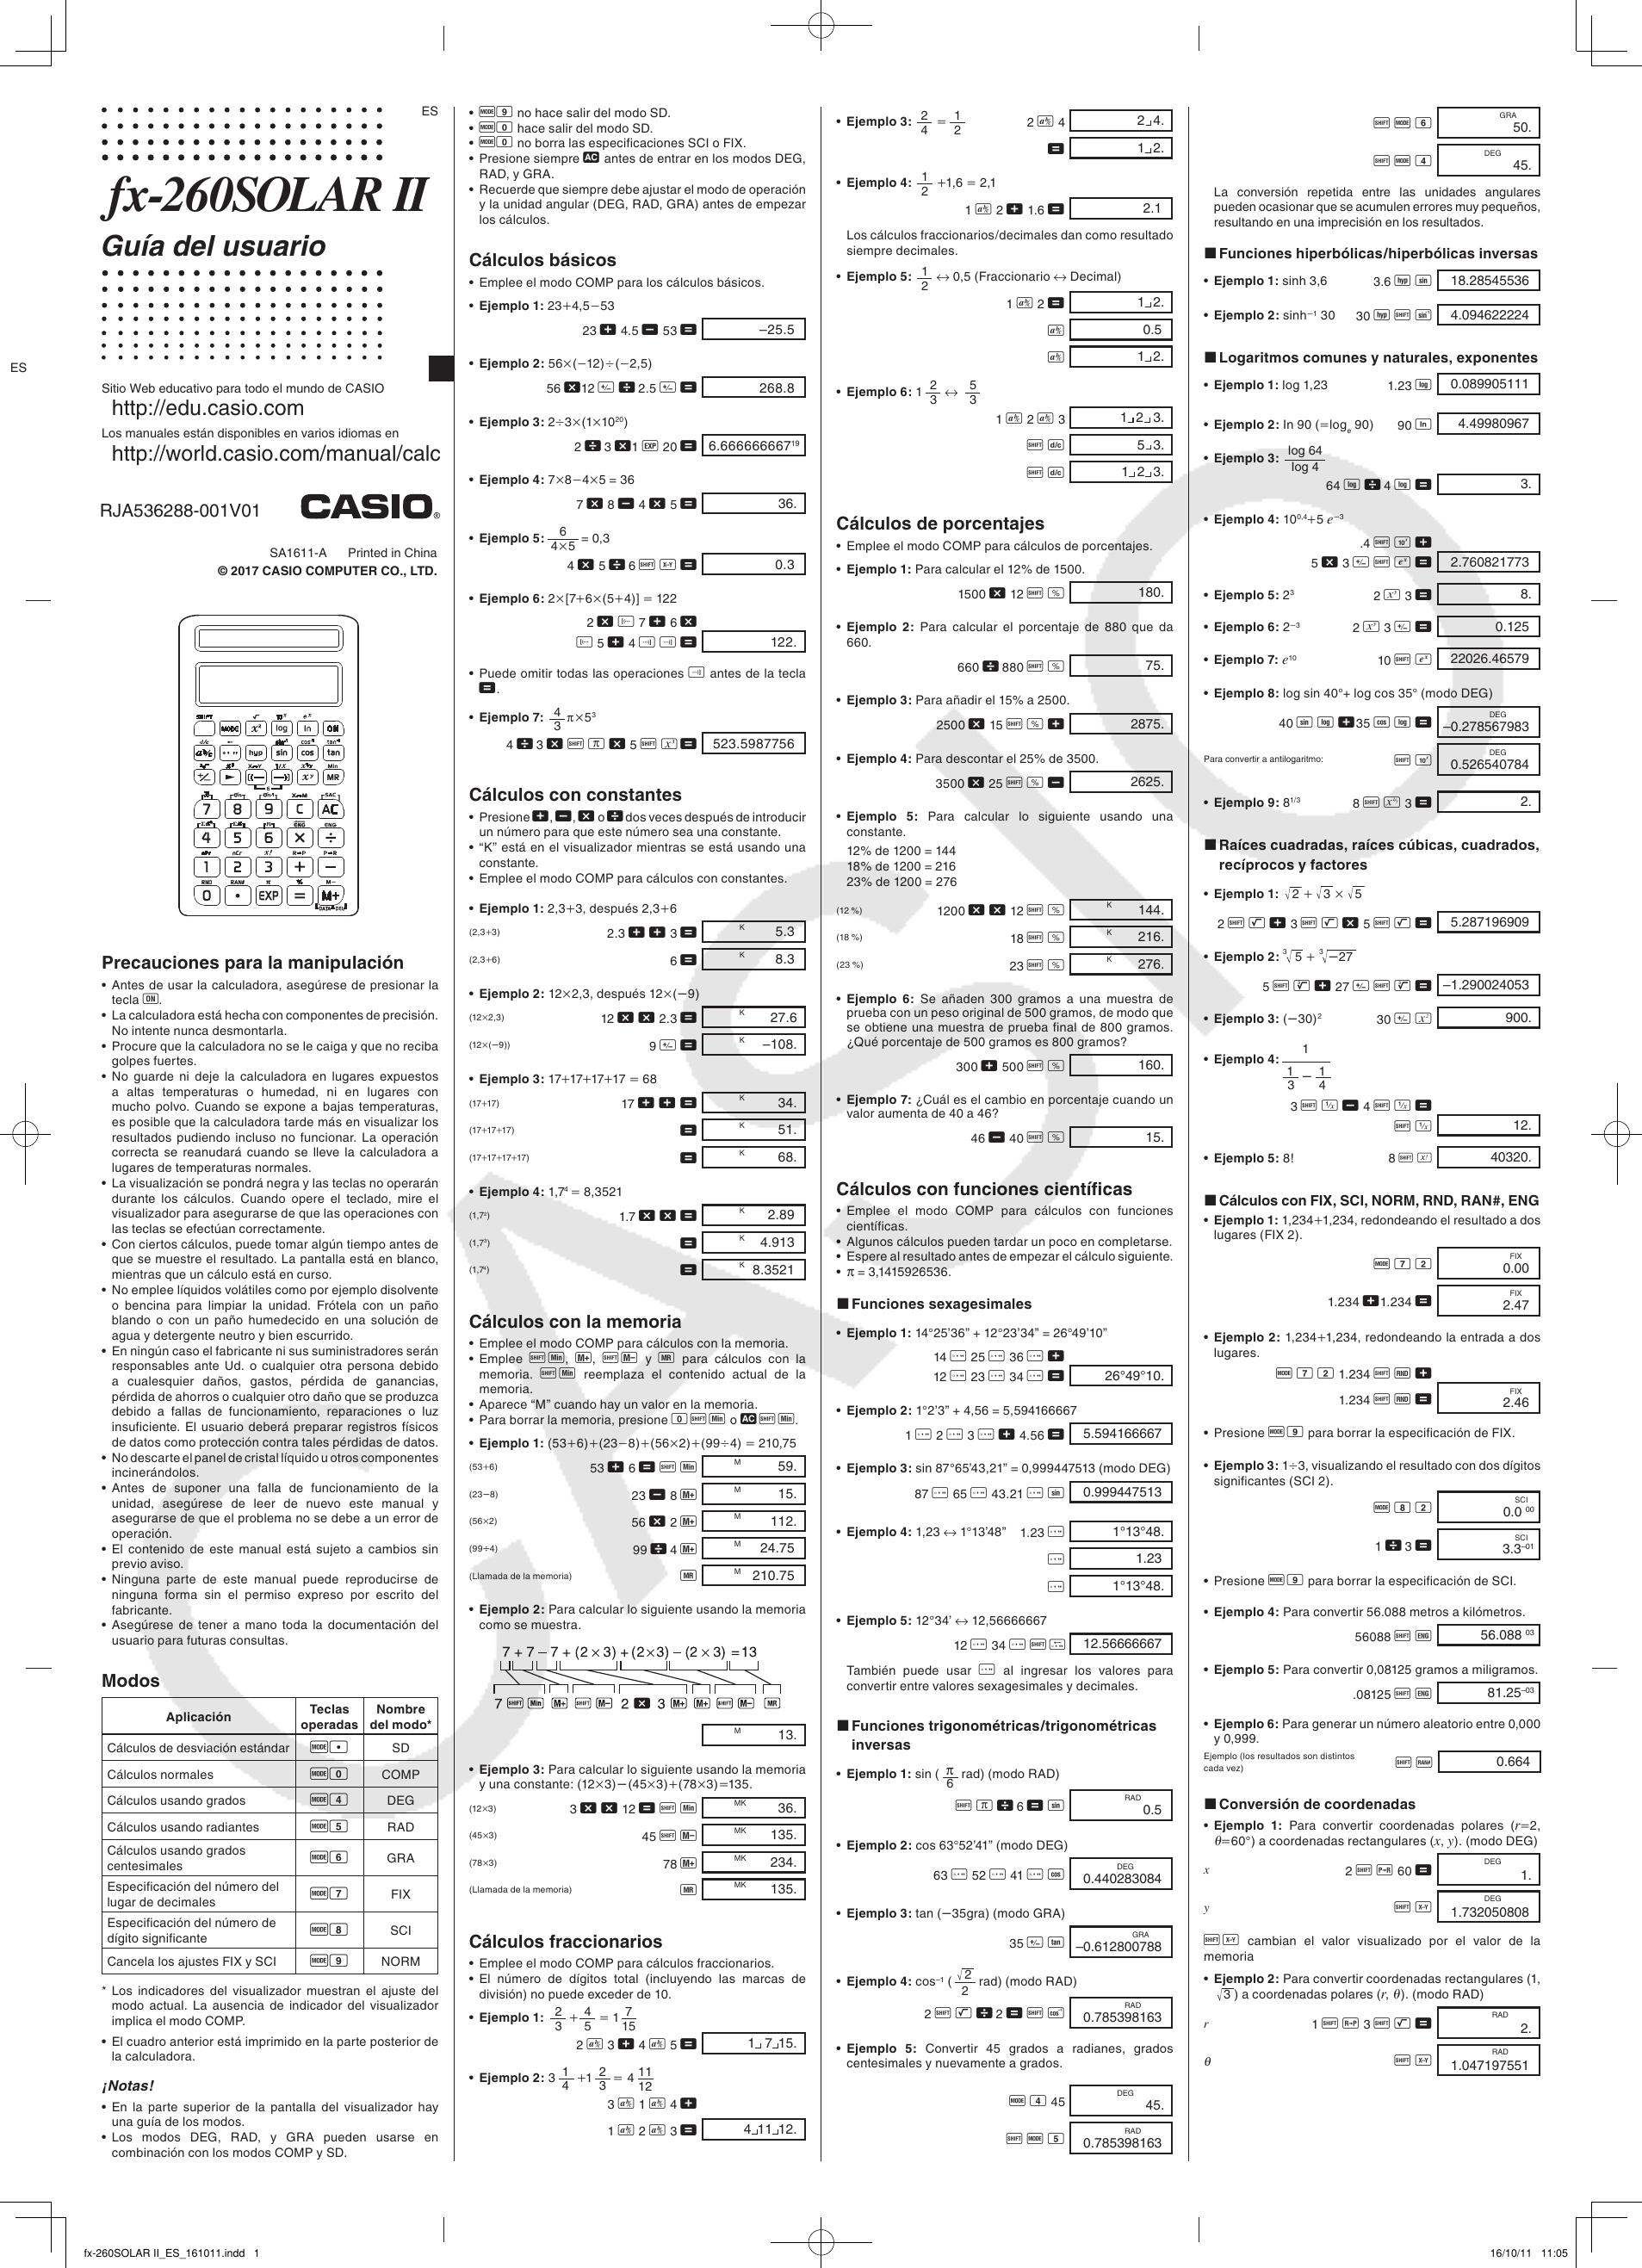 Page 1 of 2 - Casio Fx-260SOLAR II Fx-260SOLARII ES